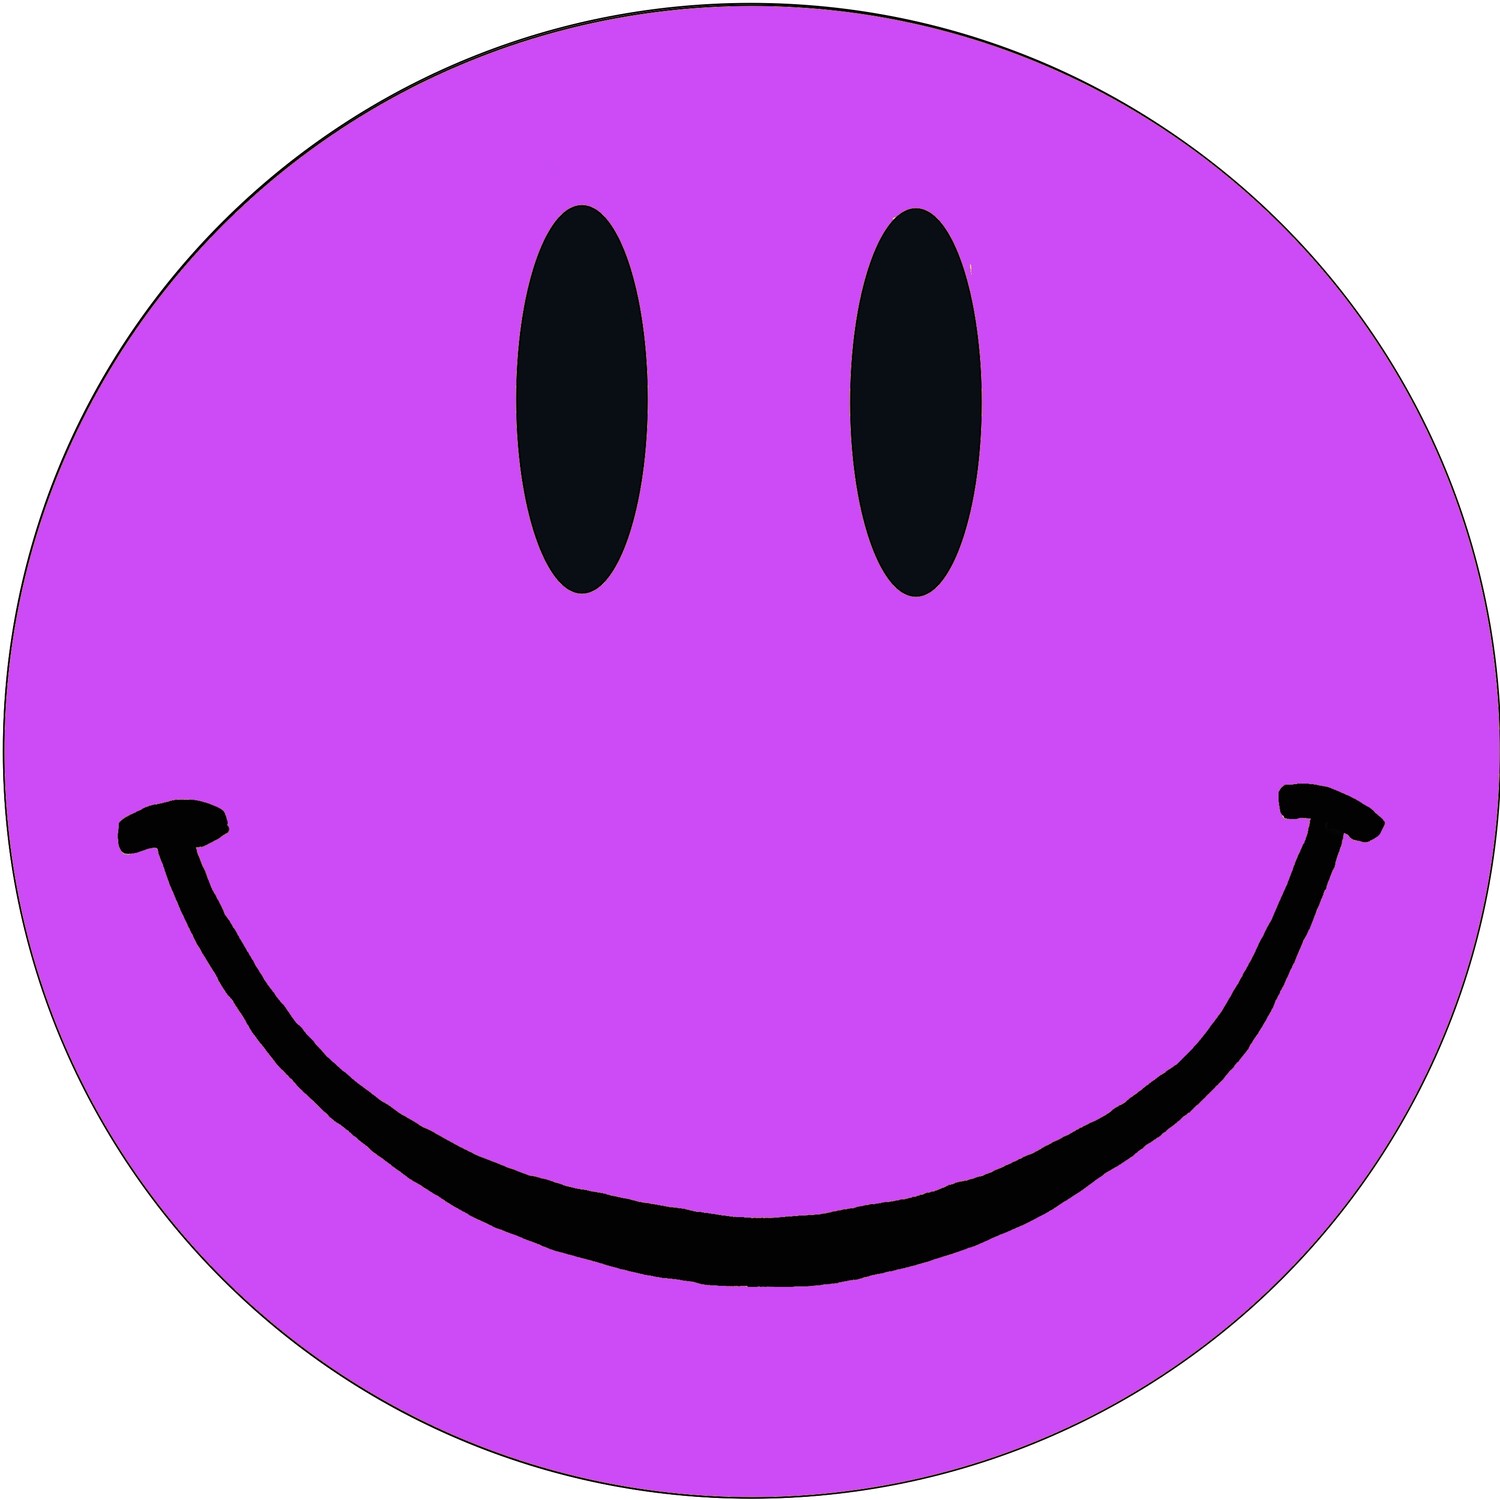 Smiley Emoticon Purple - ClipArt Best